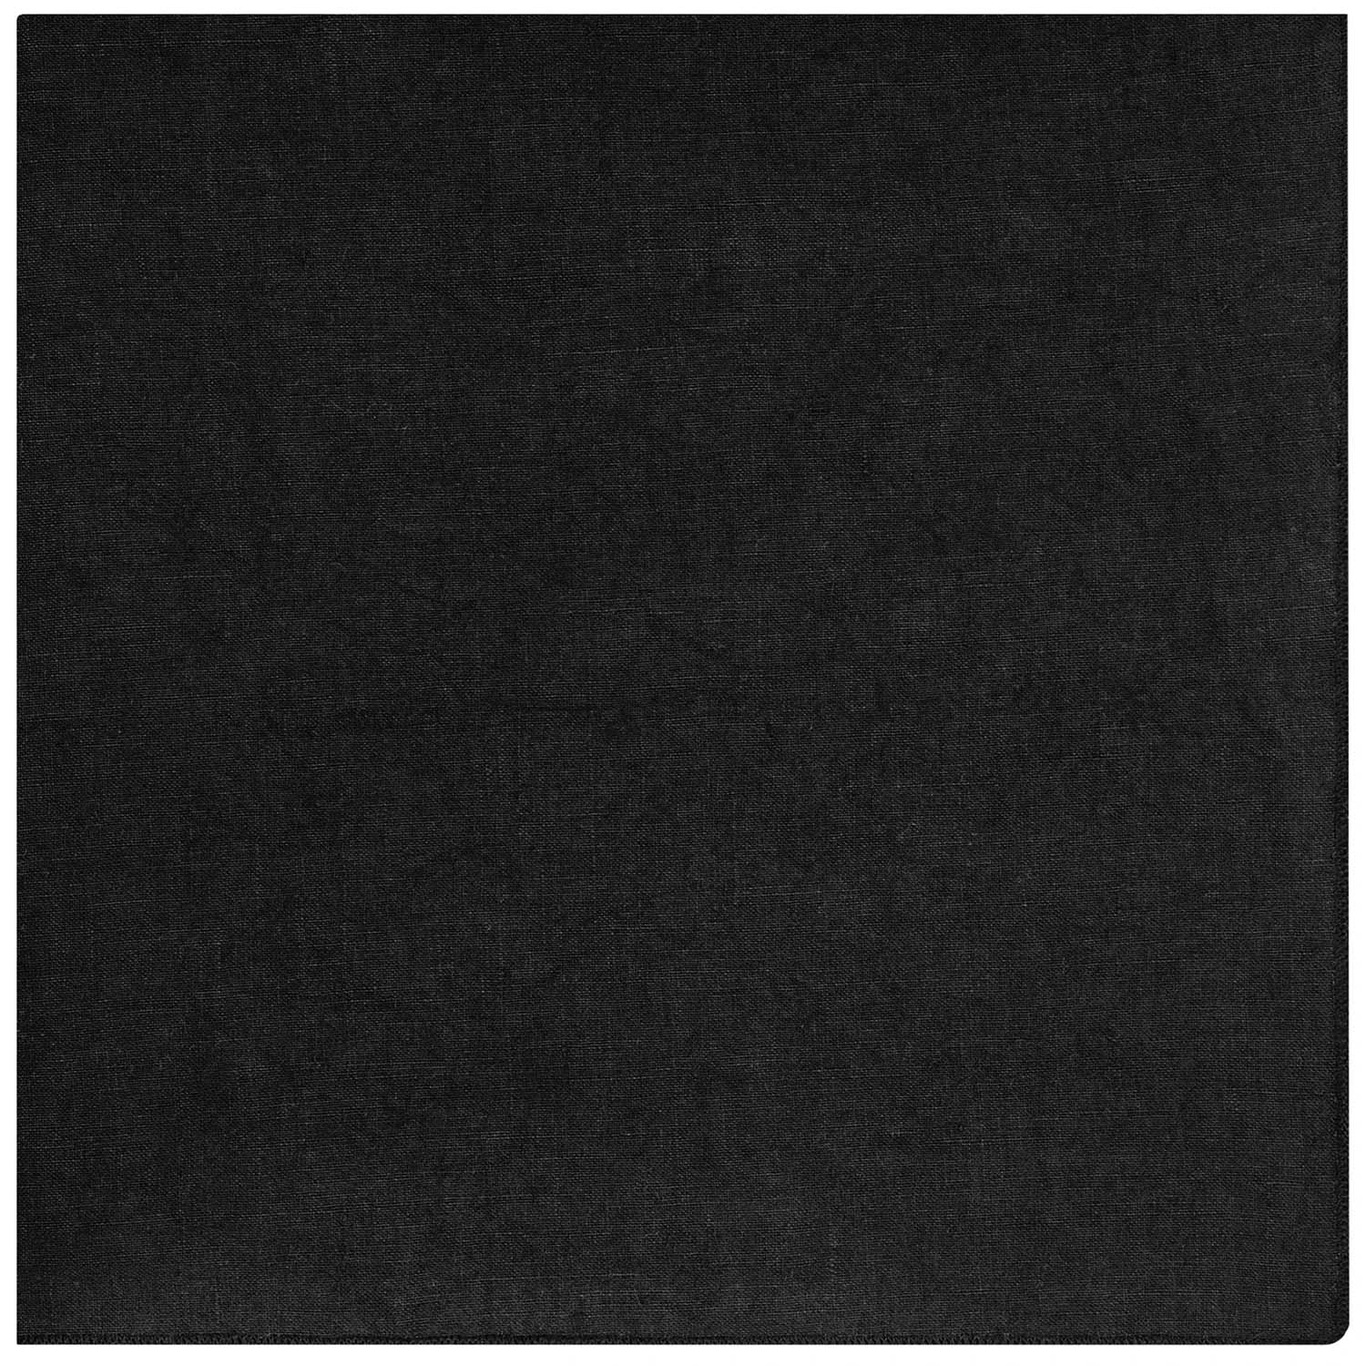 LINEO Tissue Linen, Black